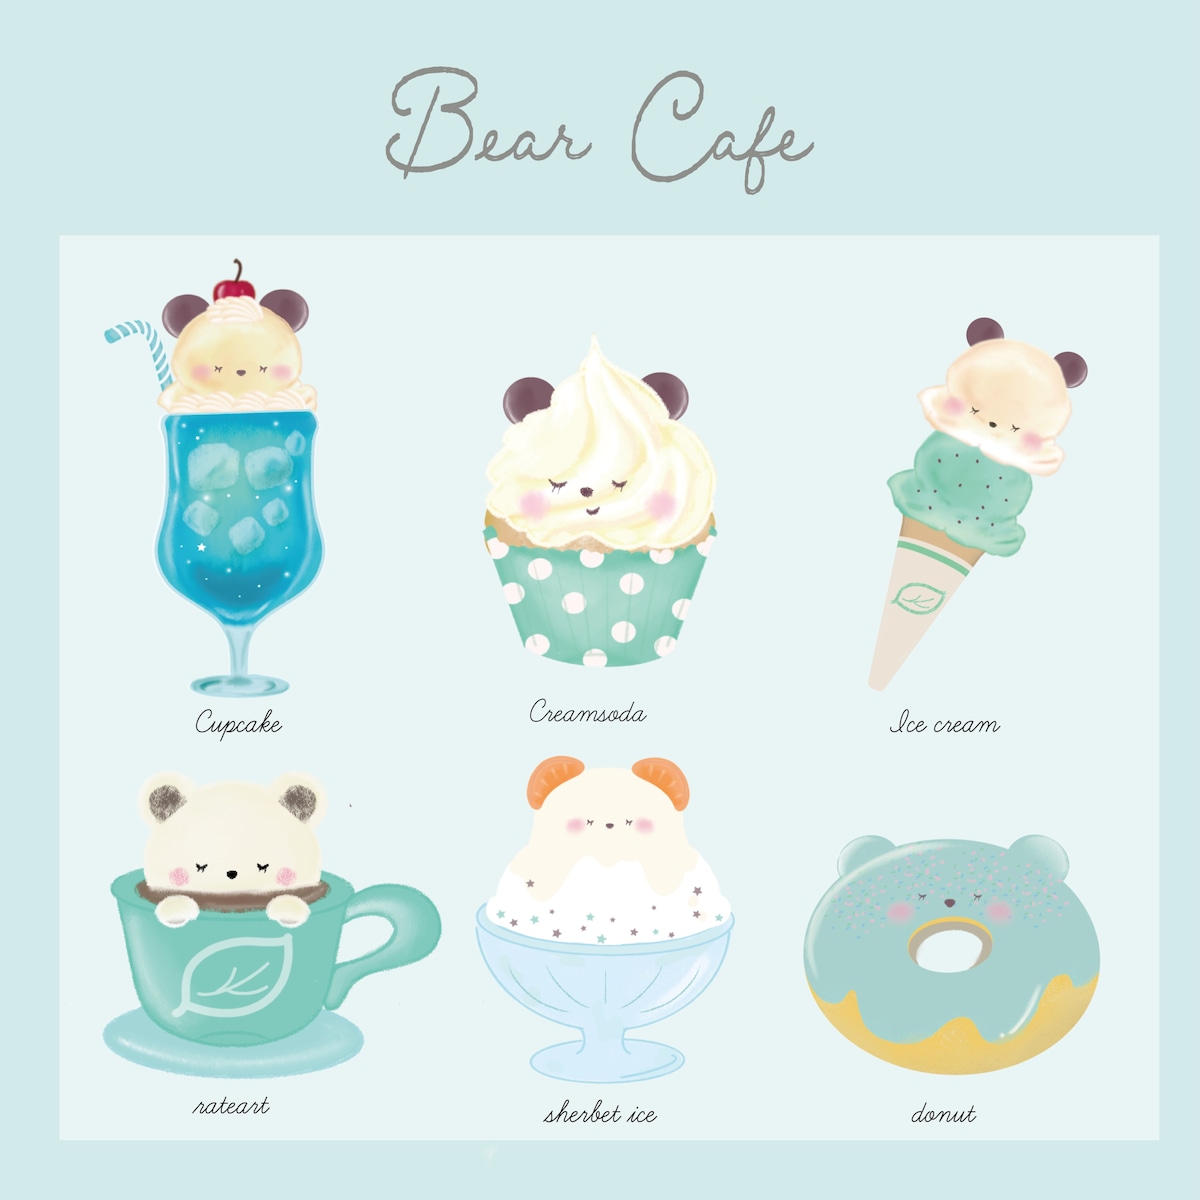 Bear cafe